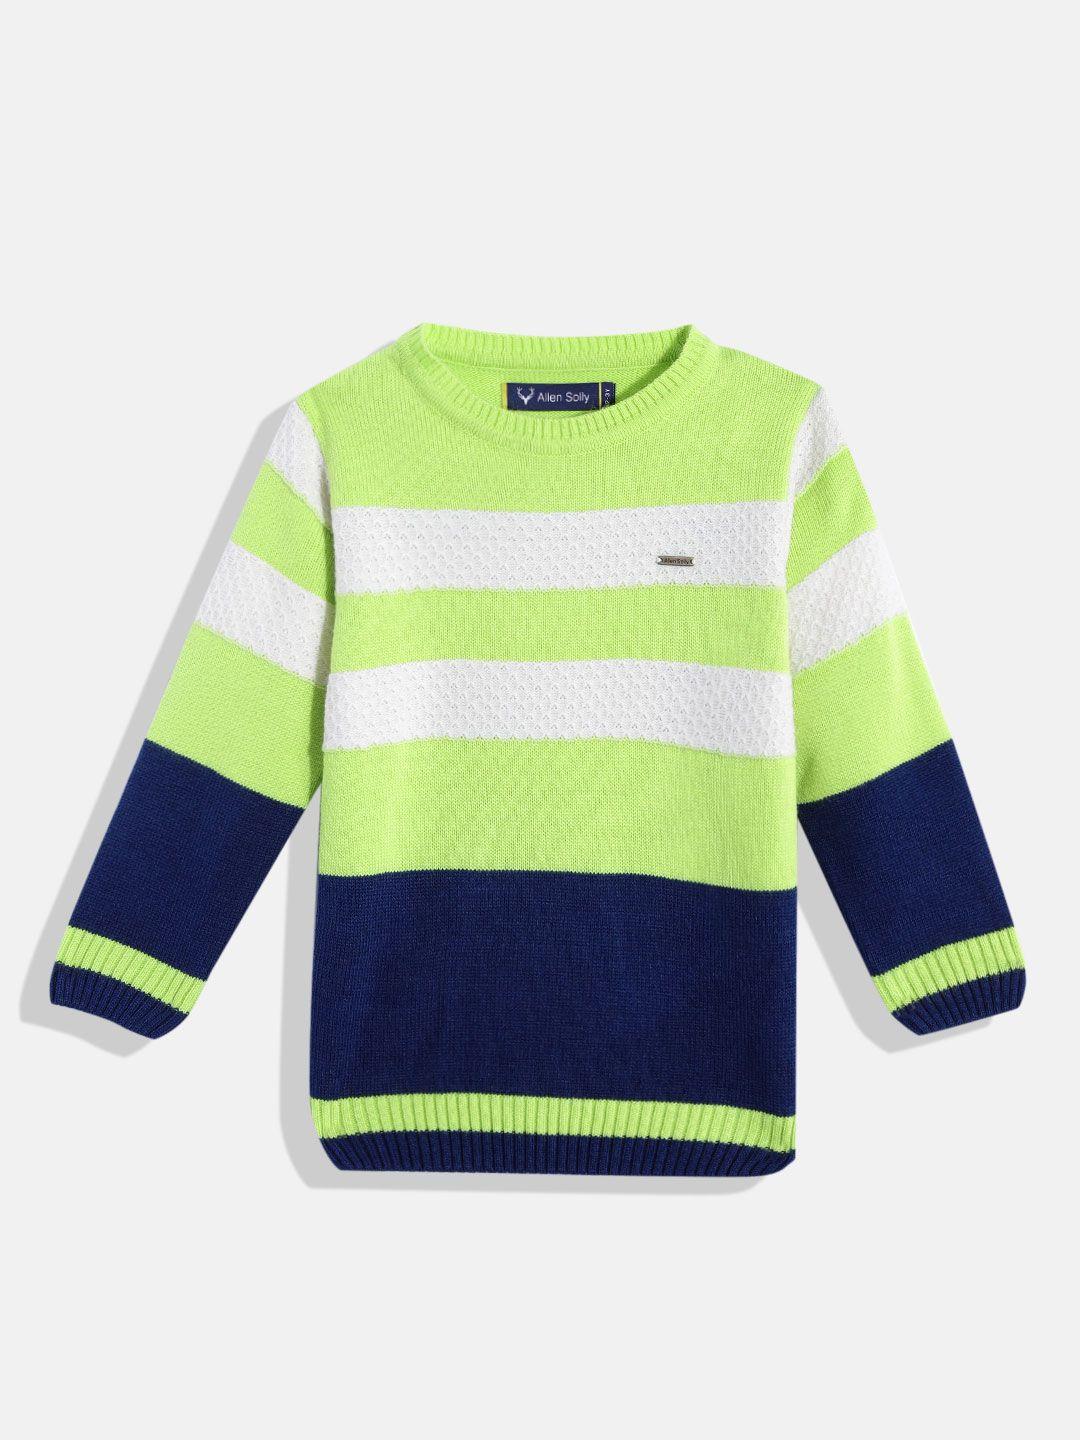 allen solly junior boys fluorescent green & navy blue striped striped pullover